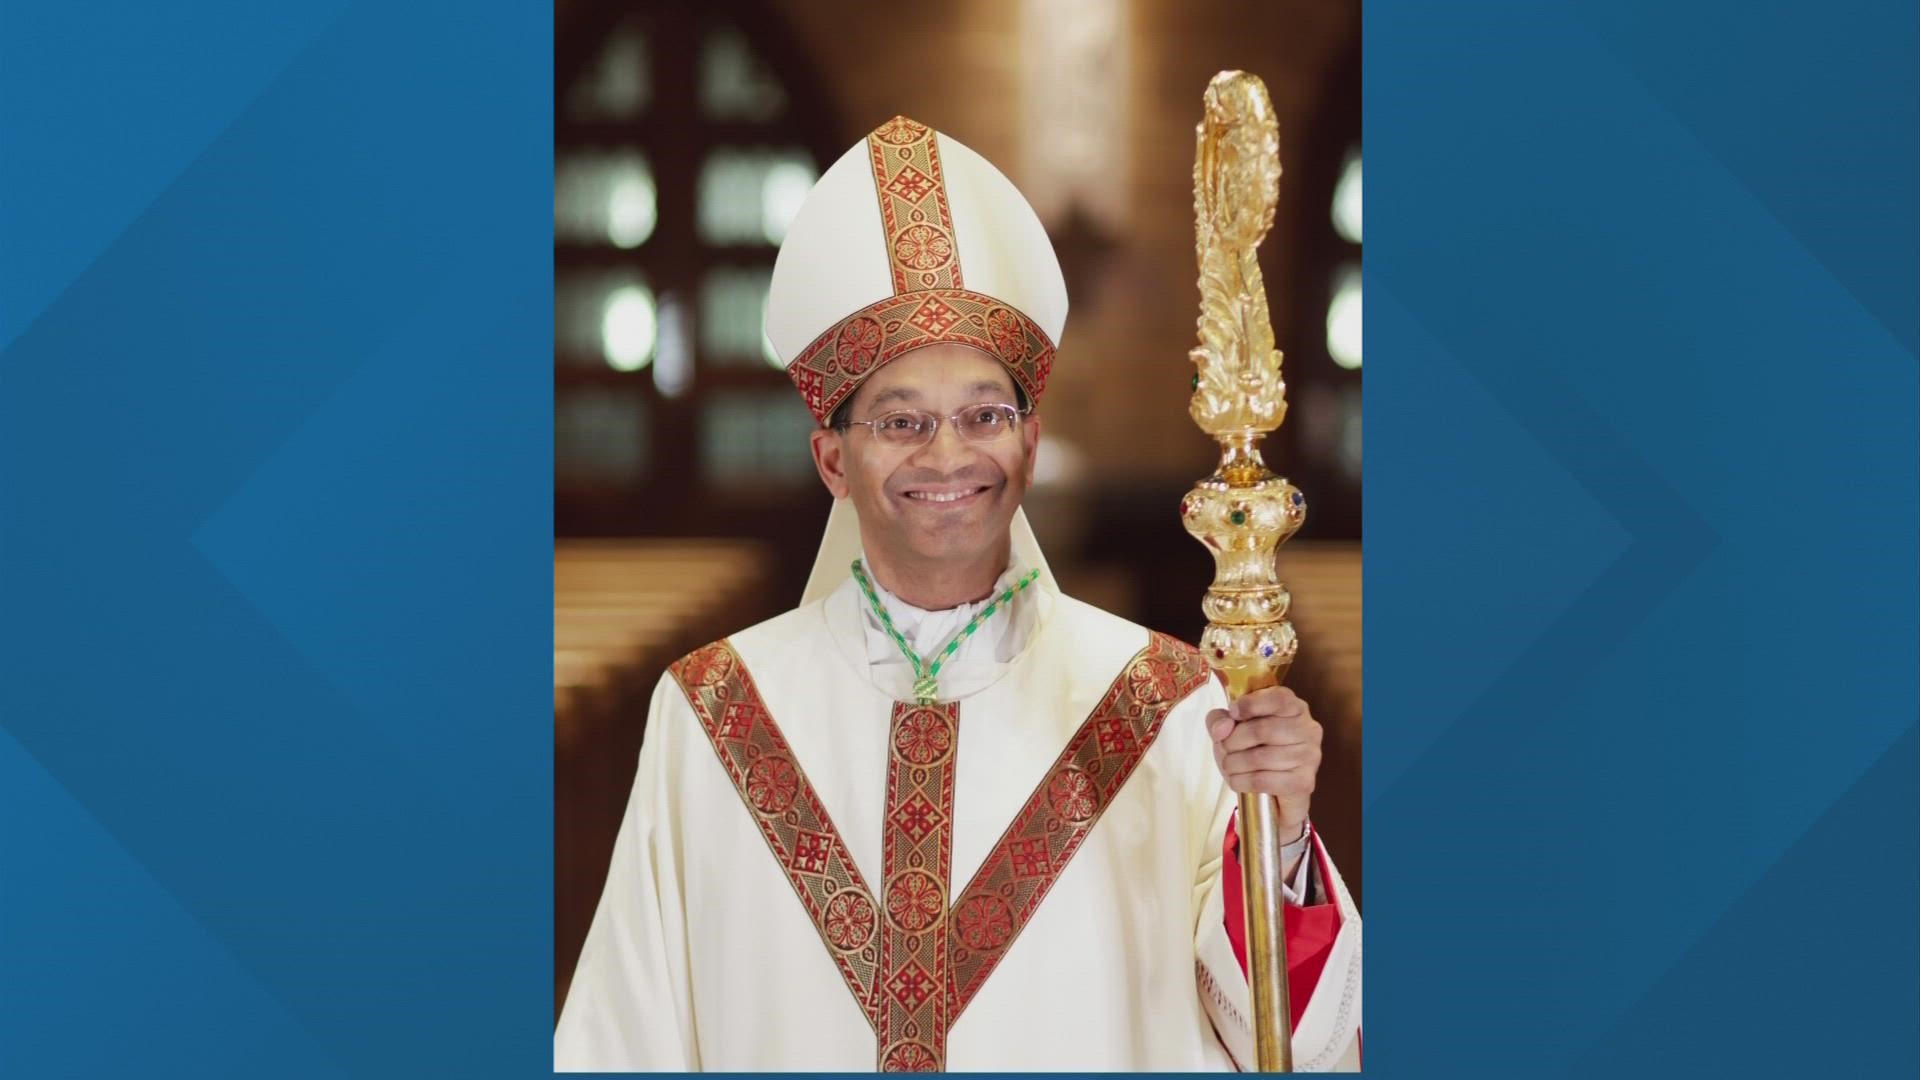 Father Earl Fernandes, a priest of the Archdiocese of Cincinnati, replaced Bishop Robert J. Brennan.